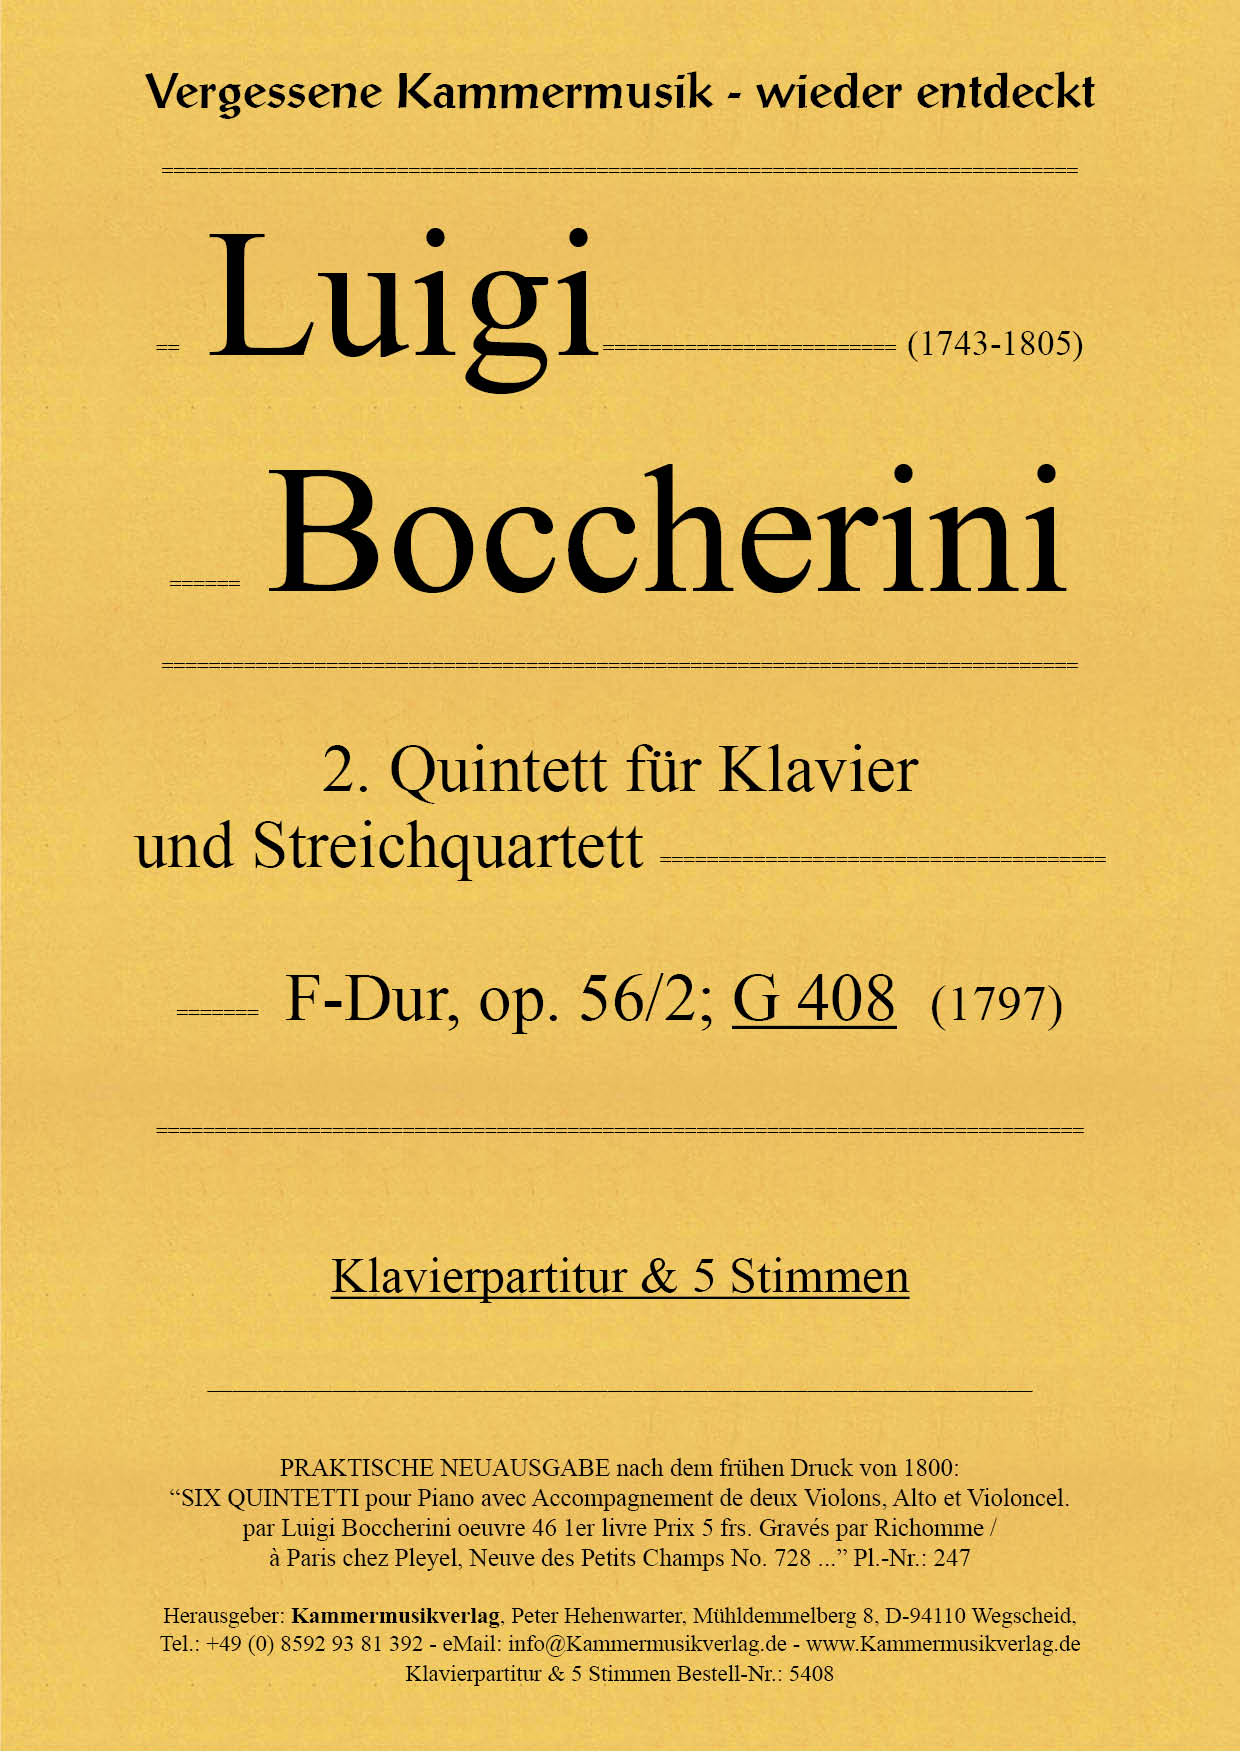 Boccherini: Piano Quintet in F Major, G 408, Op. 56, No. 2